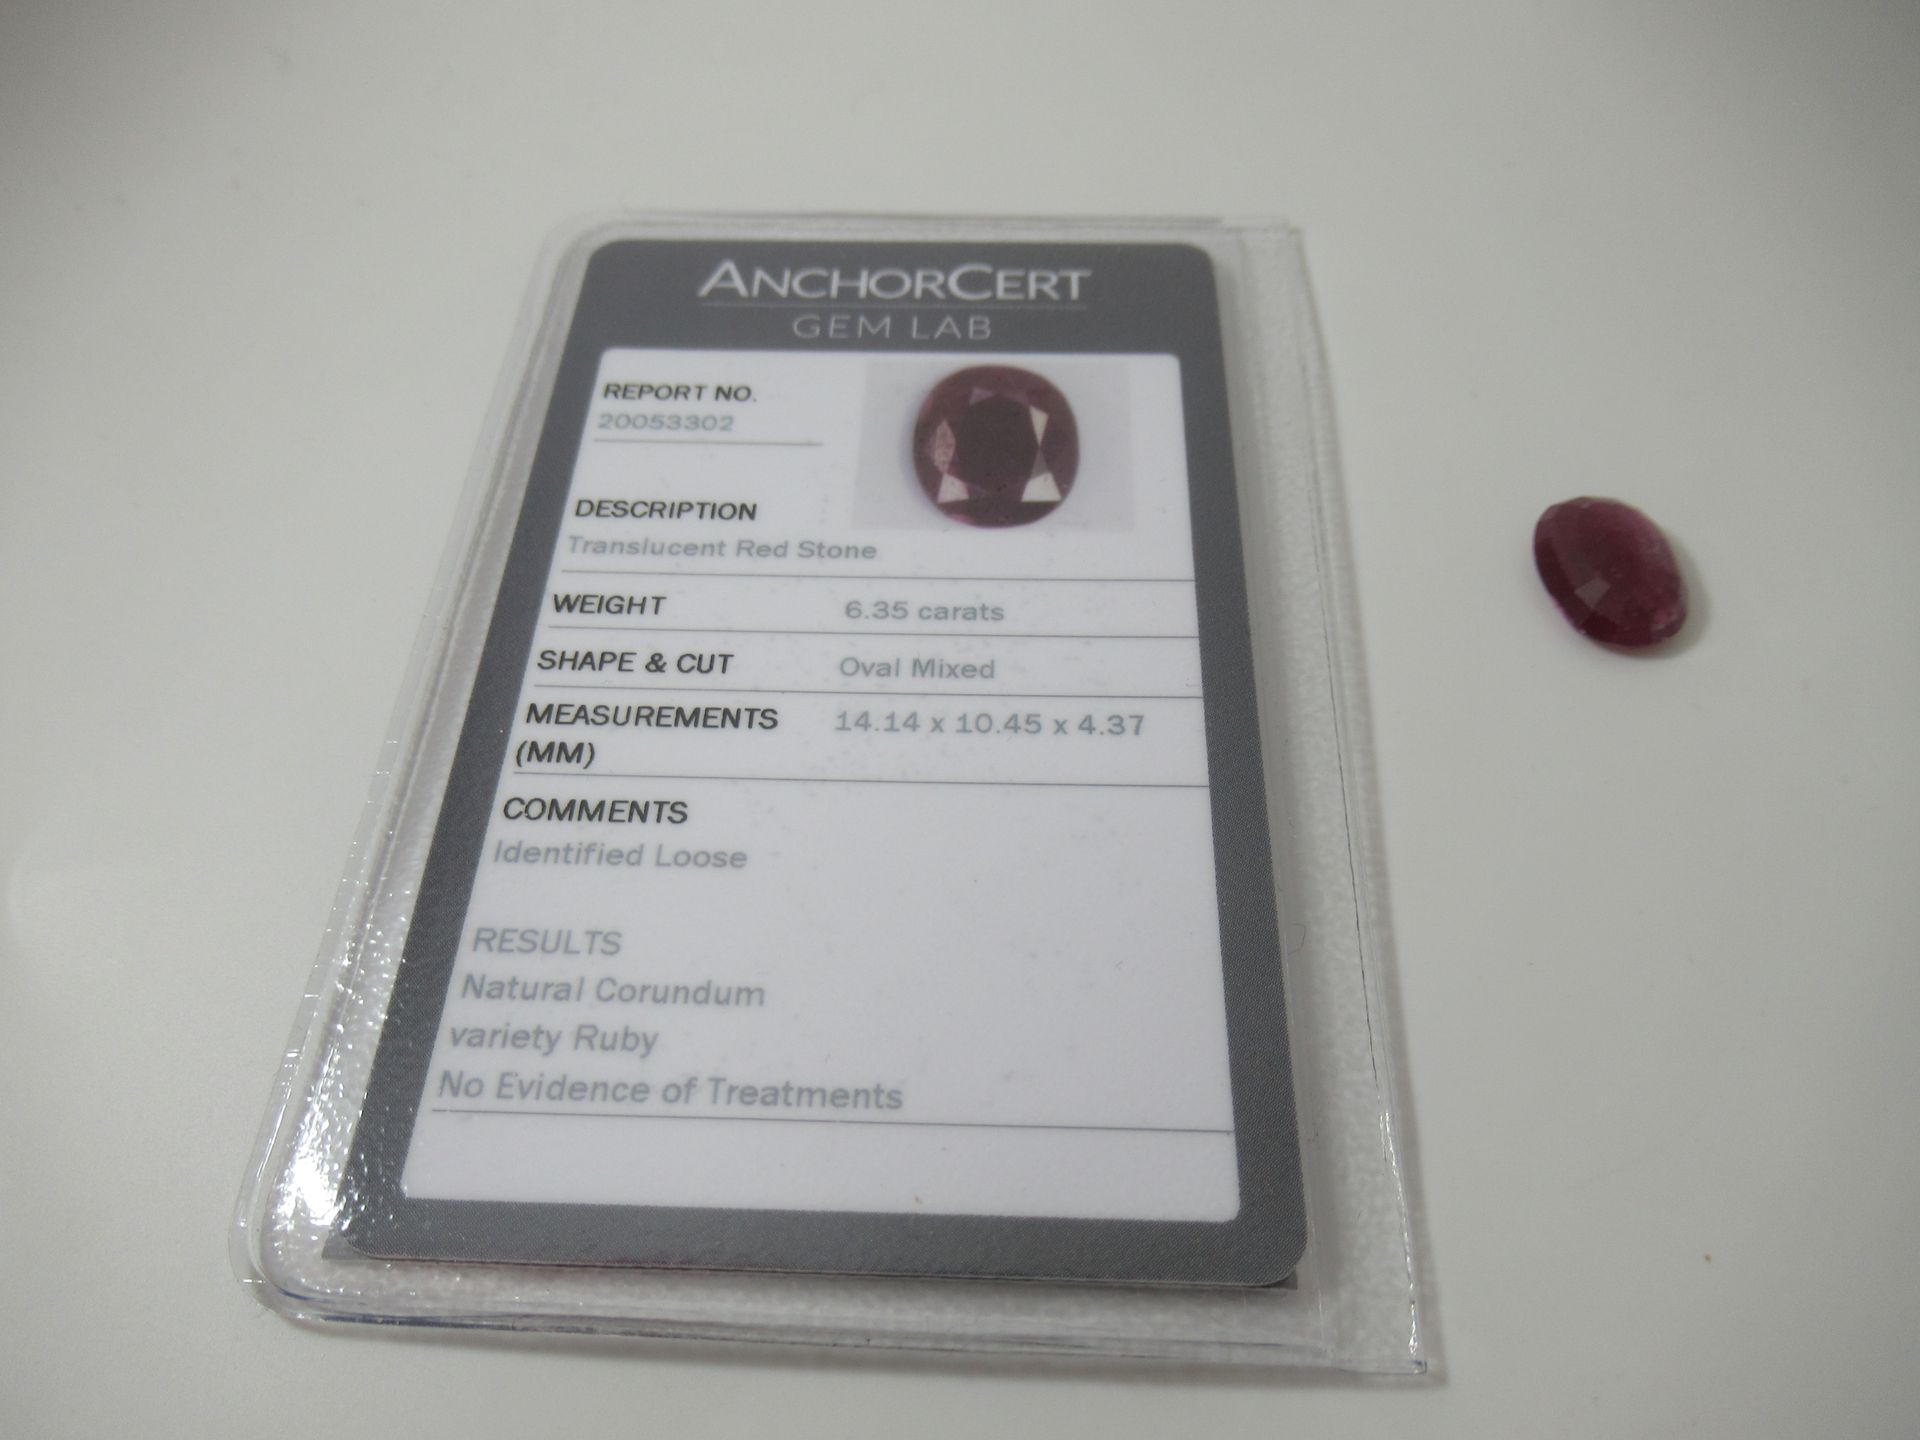 Null Rubis naturel, 6,35 carats, avec son certificat ANCHORCERT.